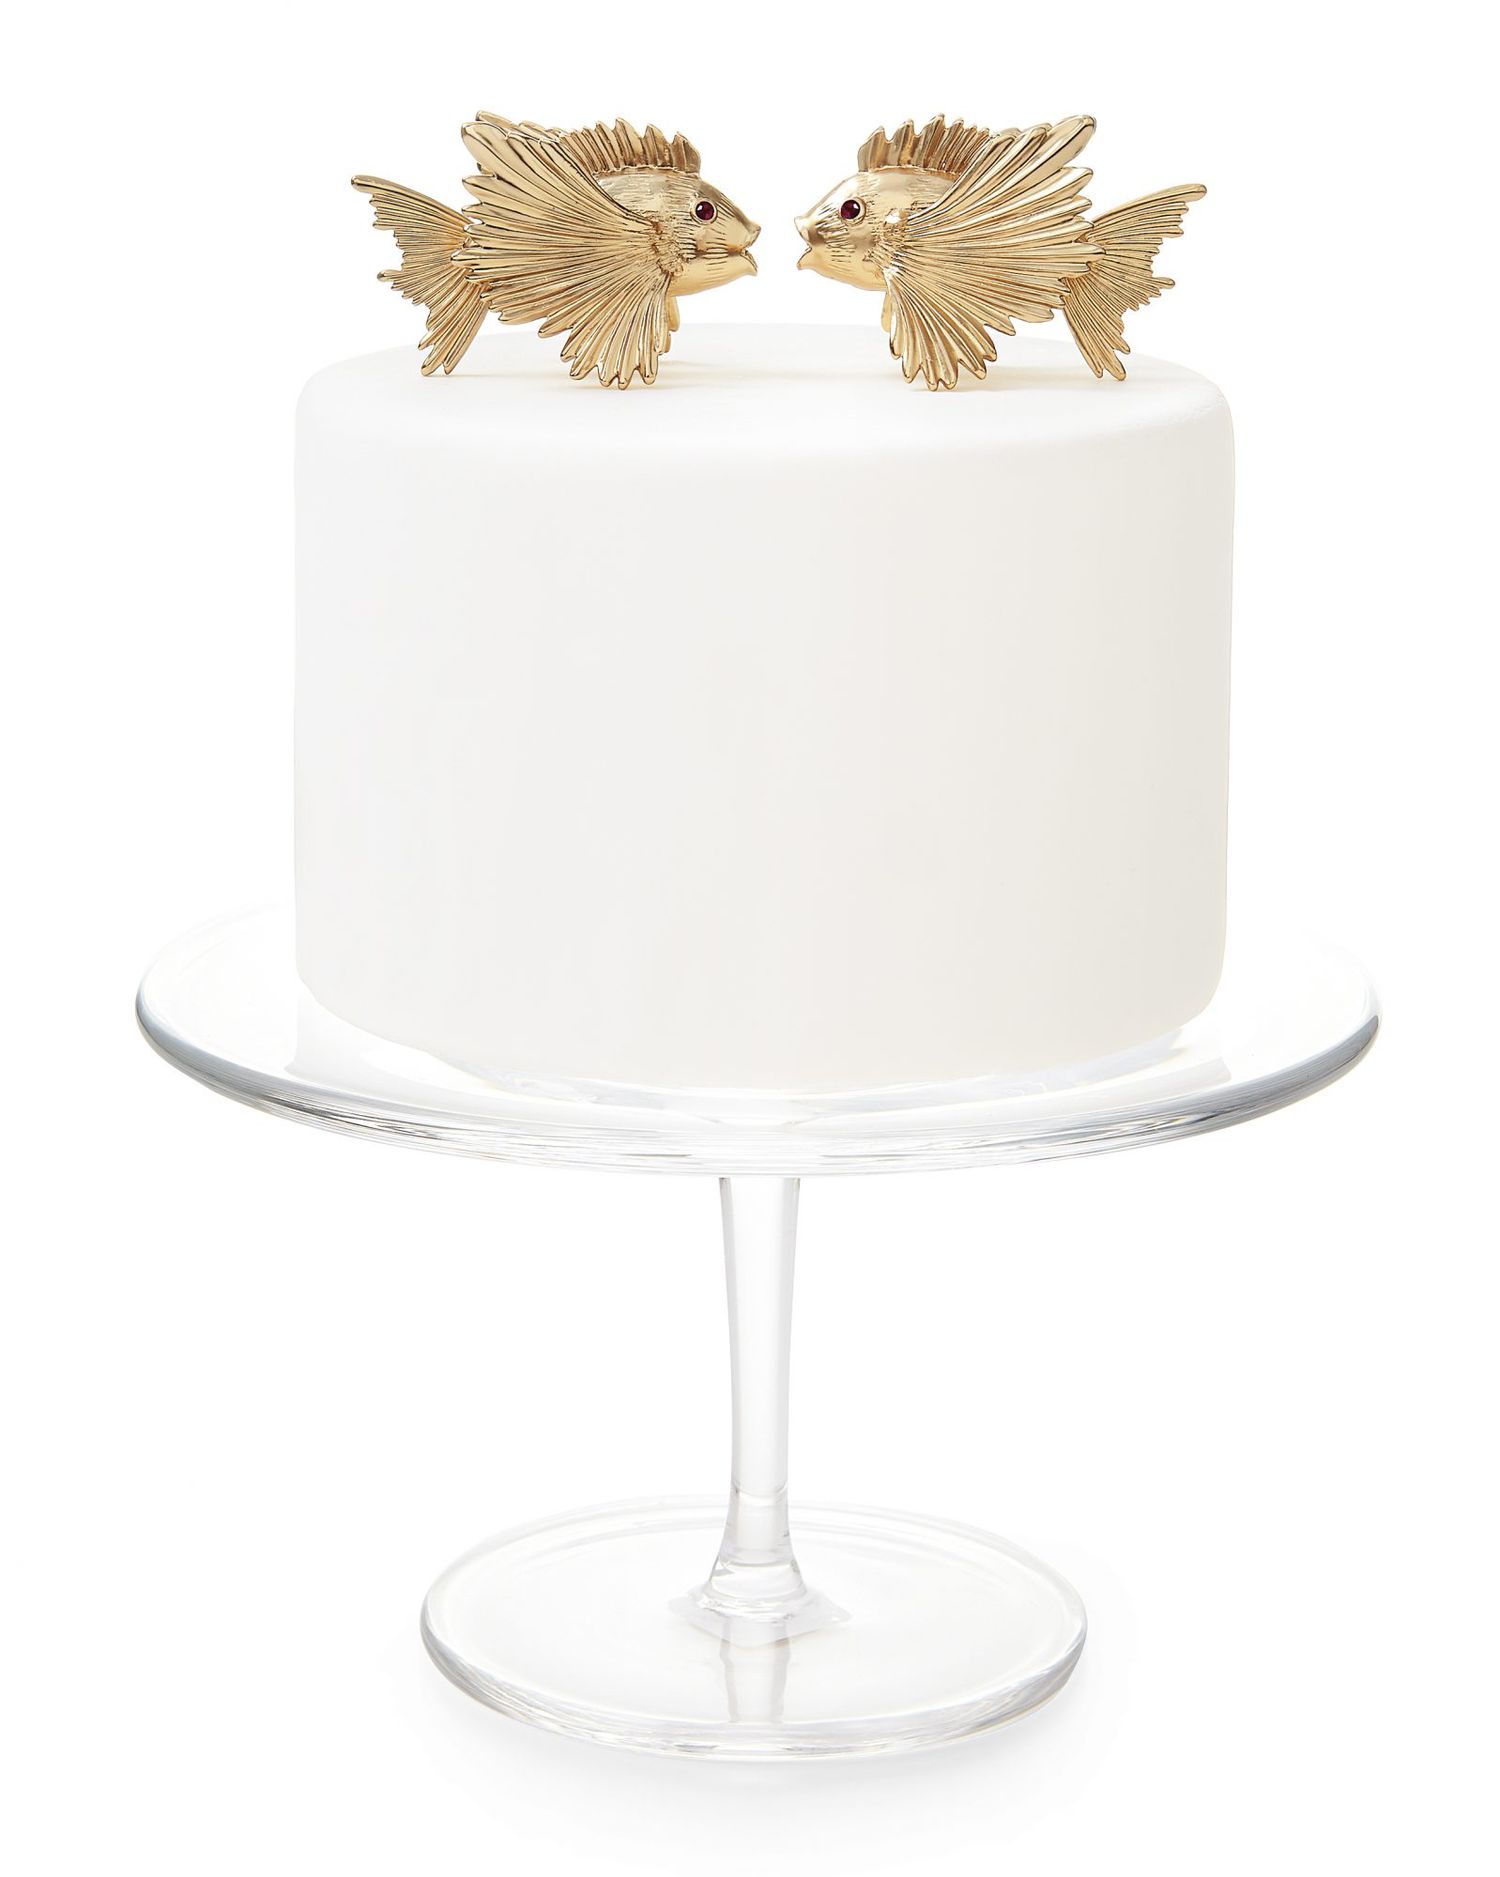 Handmade Bride & Groom Mice Wedding Mice Cake Topper Bespoke Wedding Mice FULLY CUSTOMISABLE